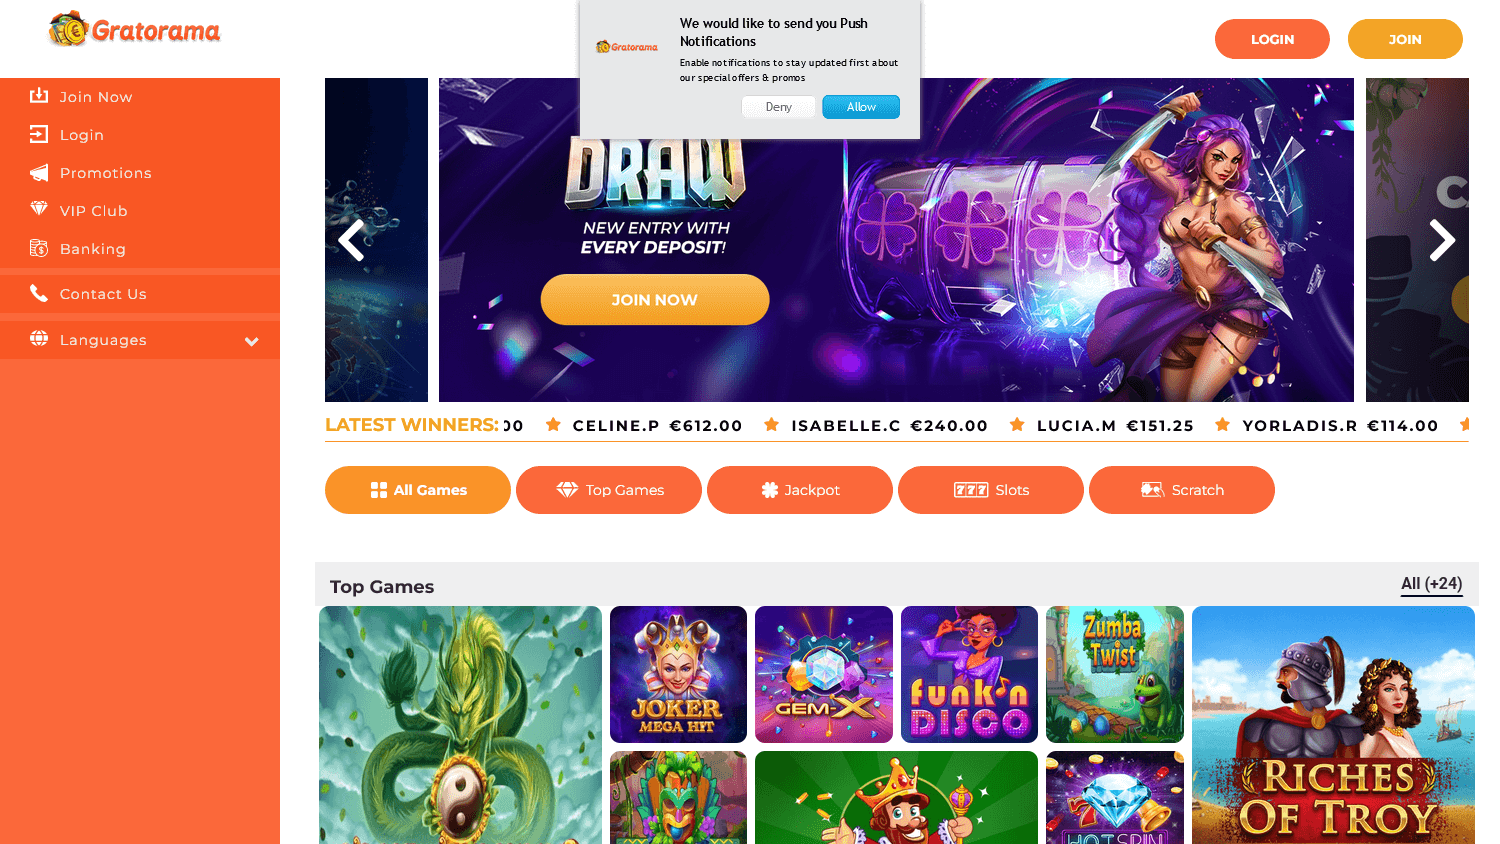 gratorama_casino_homepage_desktop